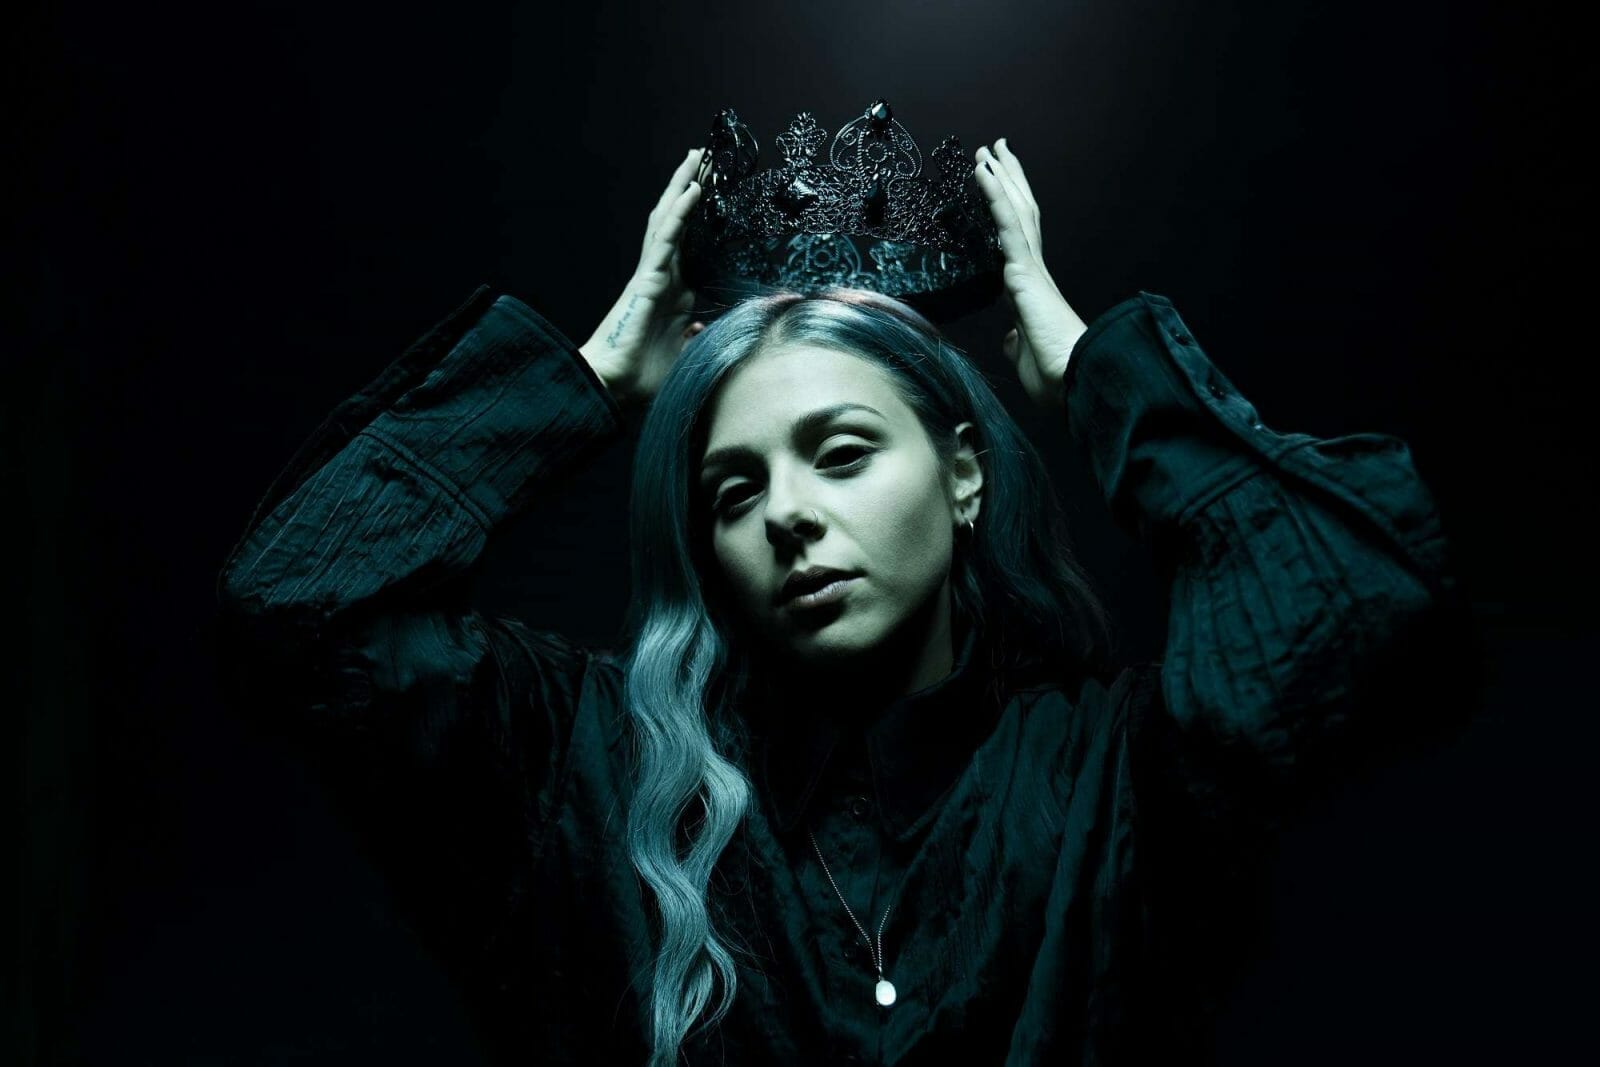 Woman, blue hair, holding crown.